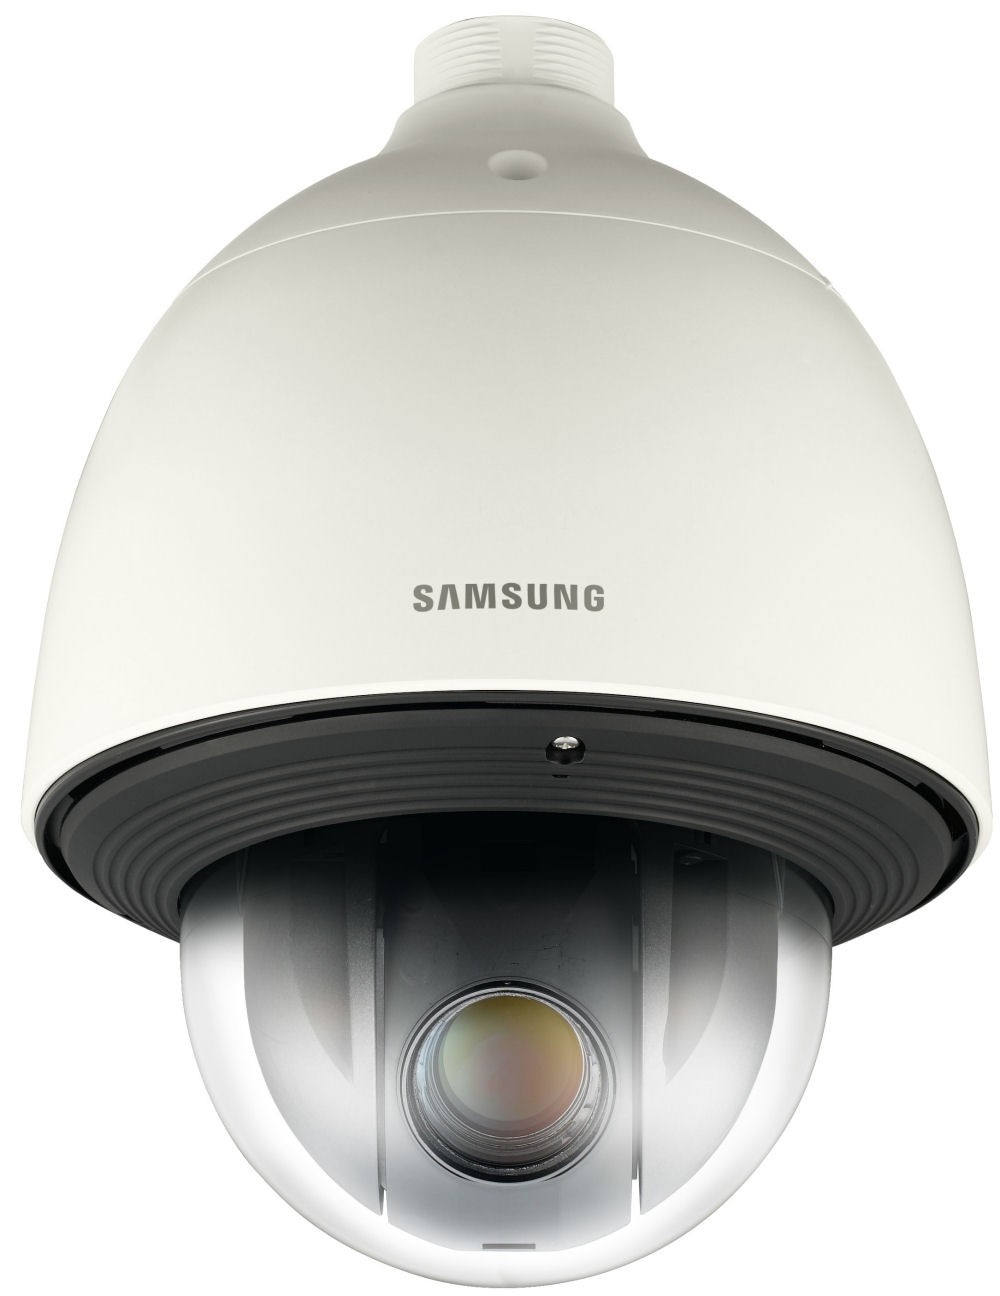 Samsung SCP2273H High Resolution 27x PTZ Dome Camera